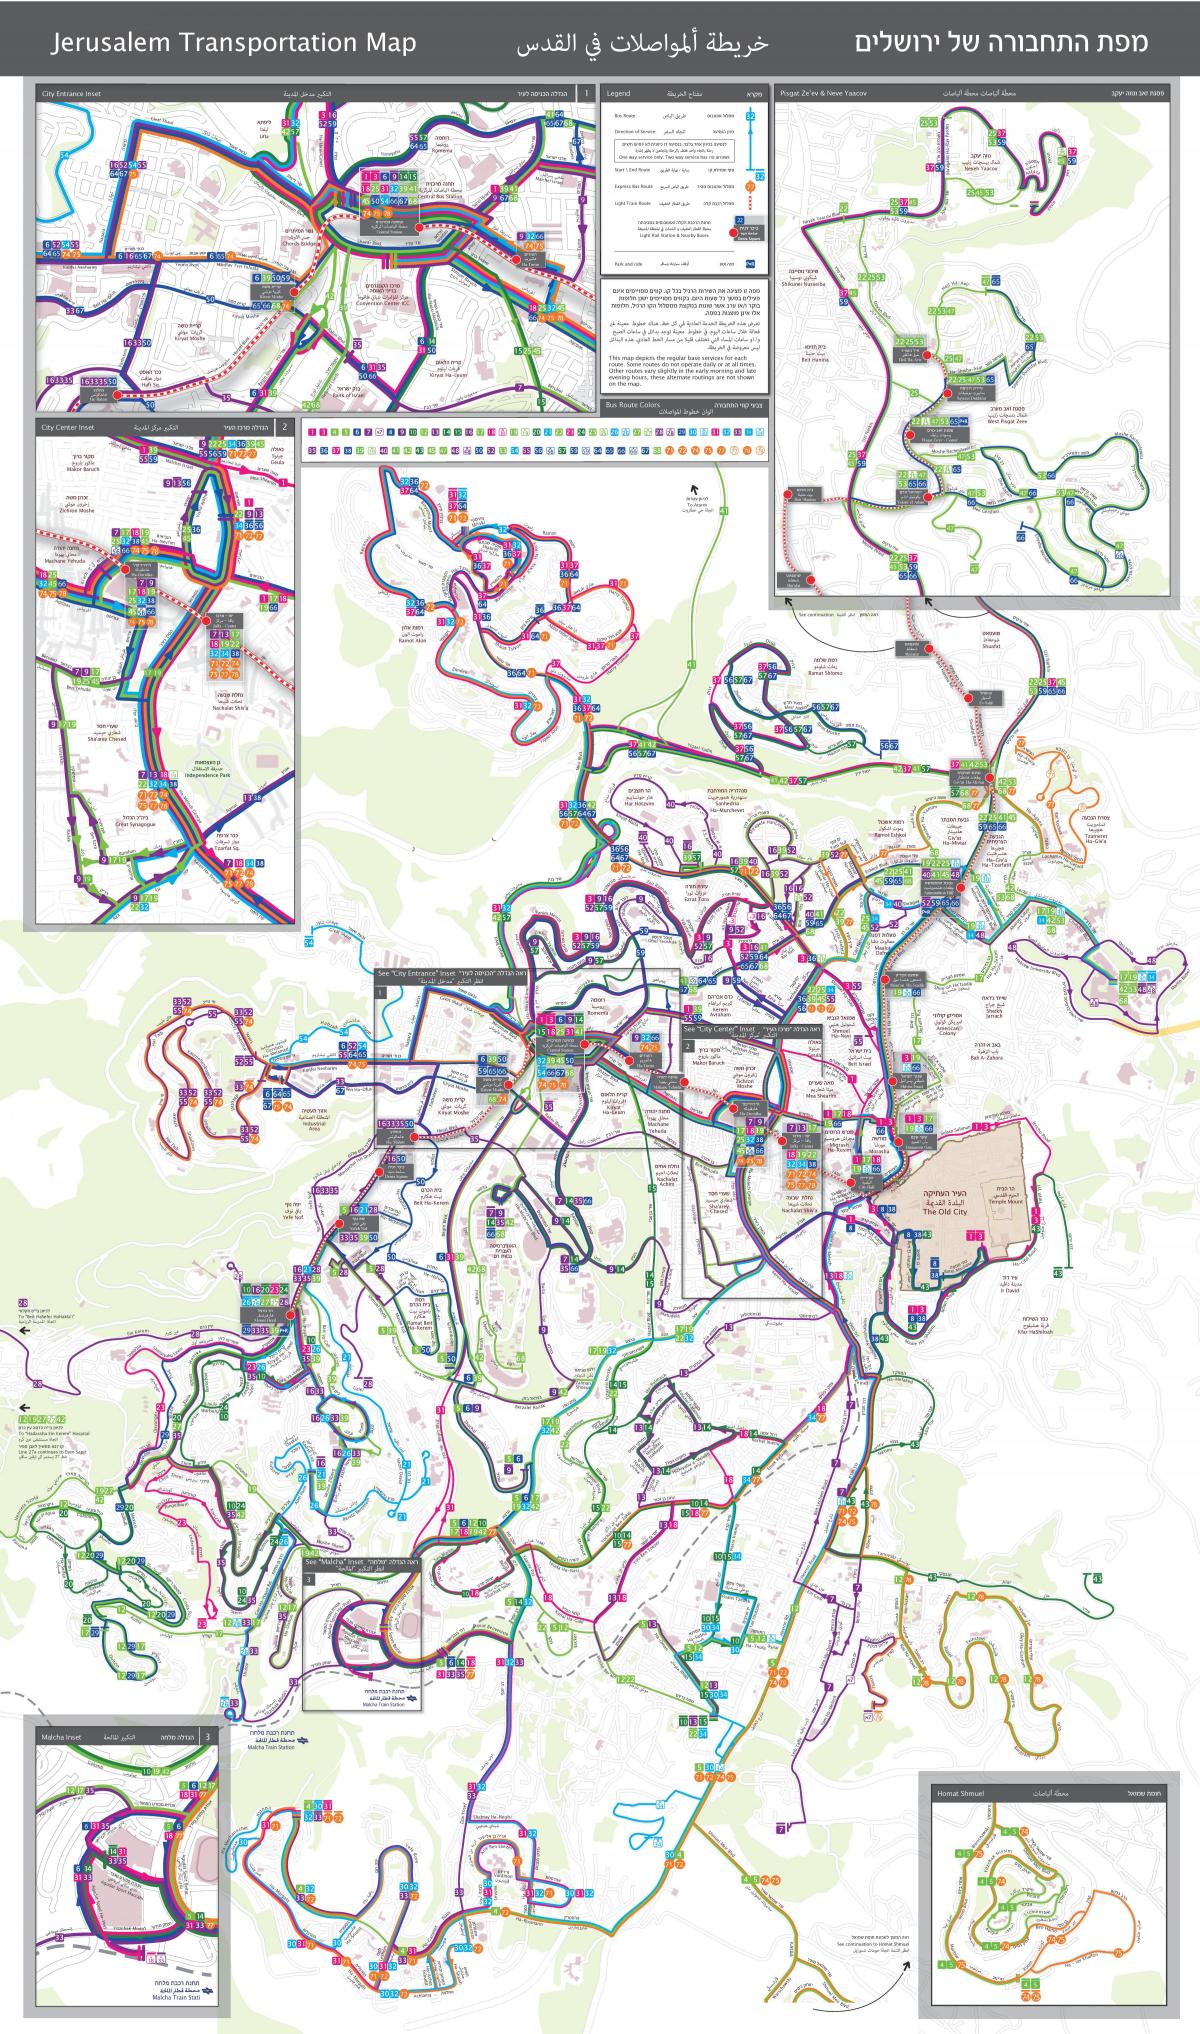 Vervoersplattegrond van Jeruzalem